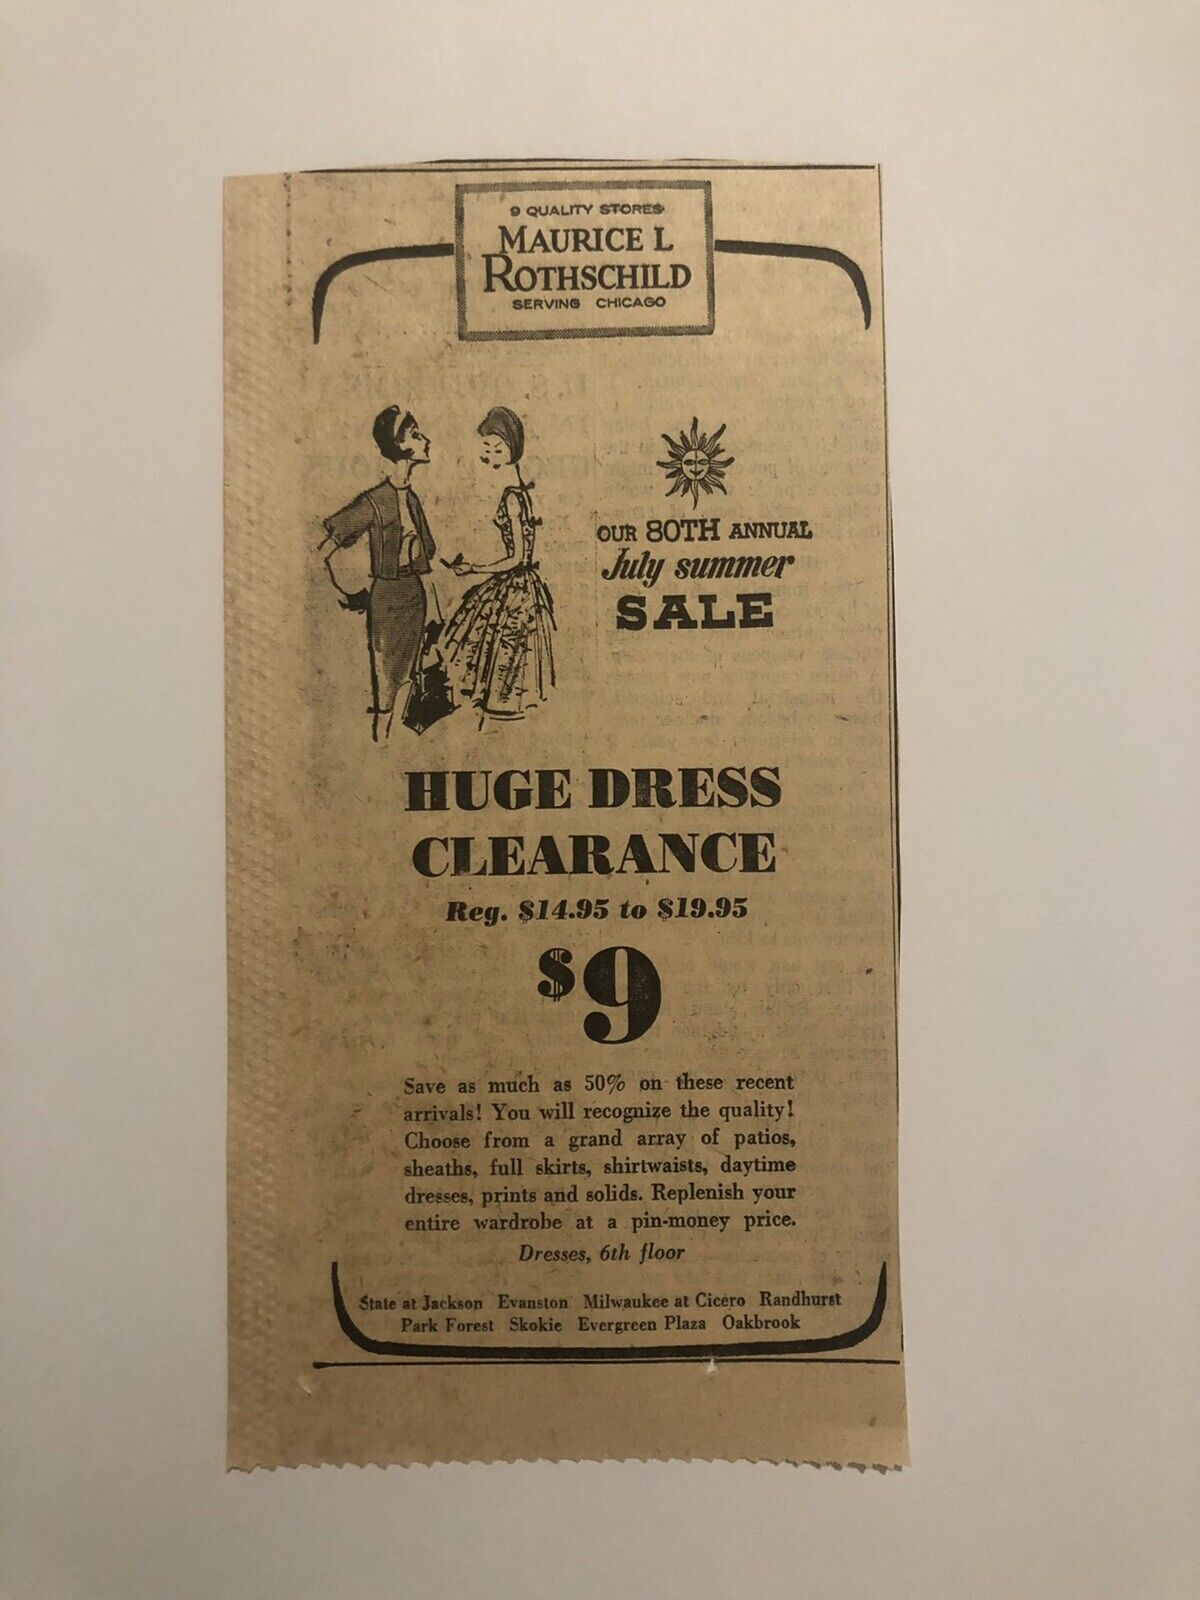 1950’s Maurice L. Rothschild Store Chicago Women’s Fashion Newspaper Ad